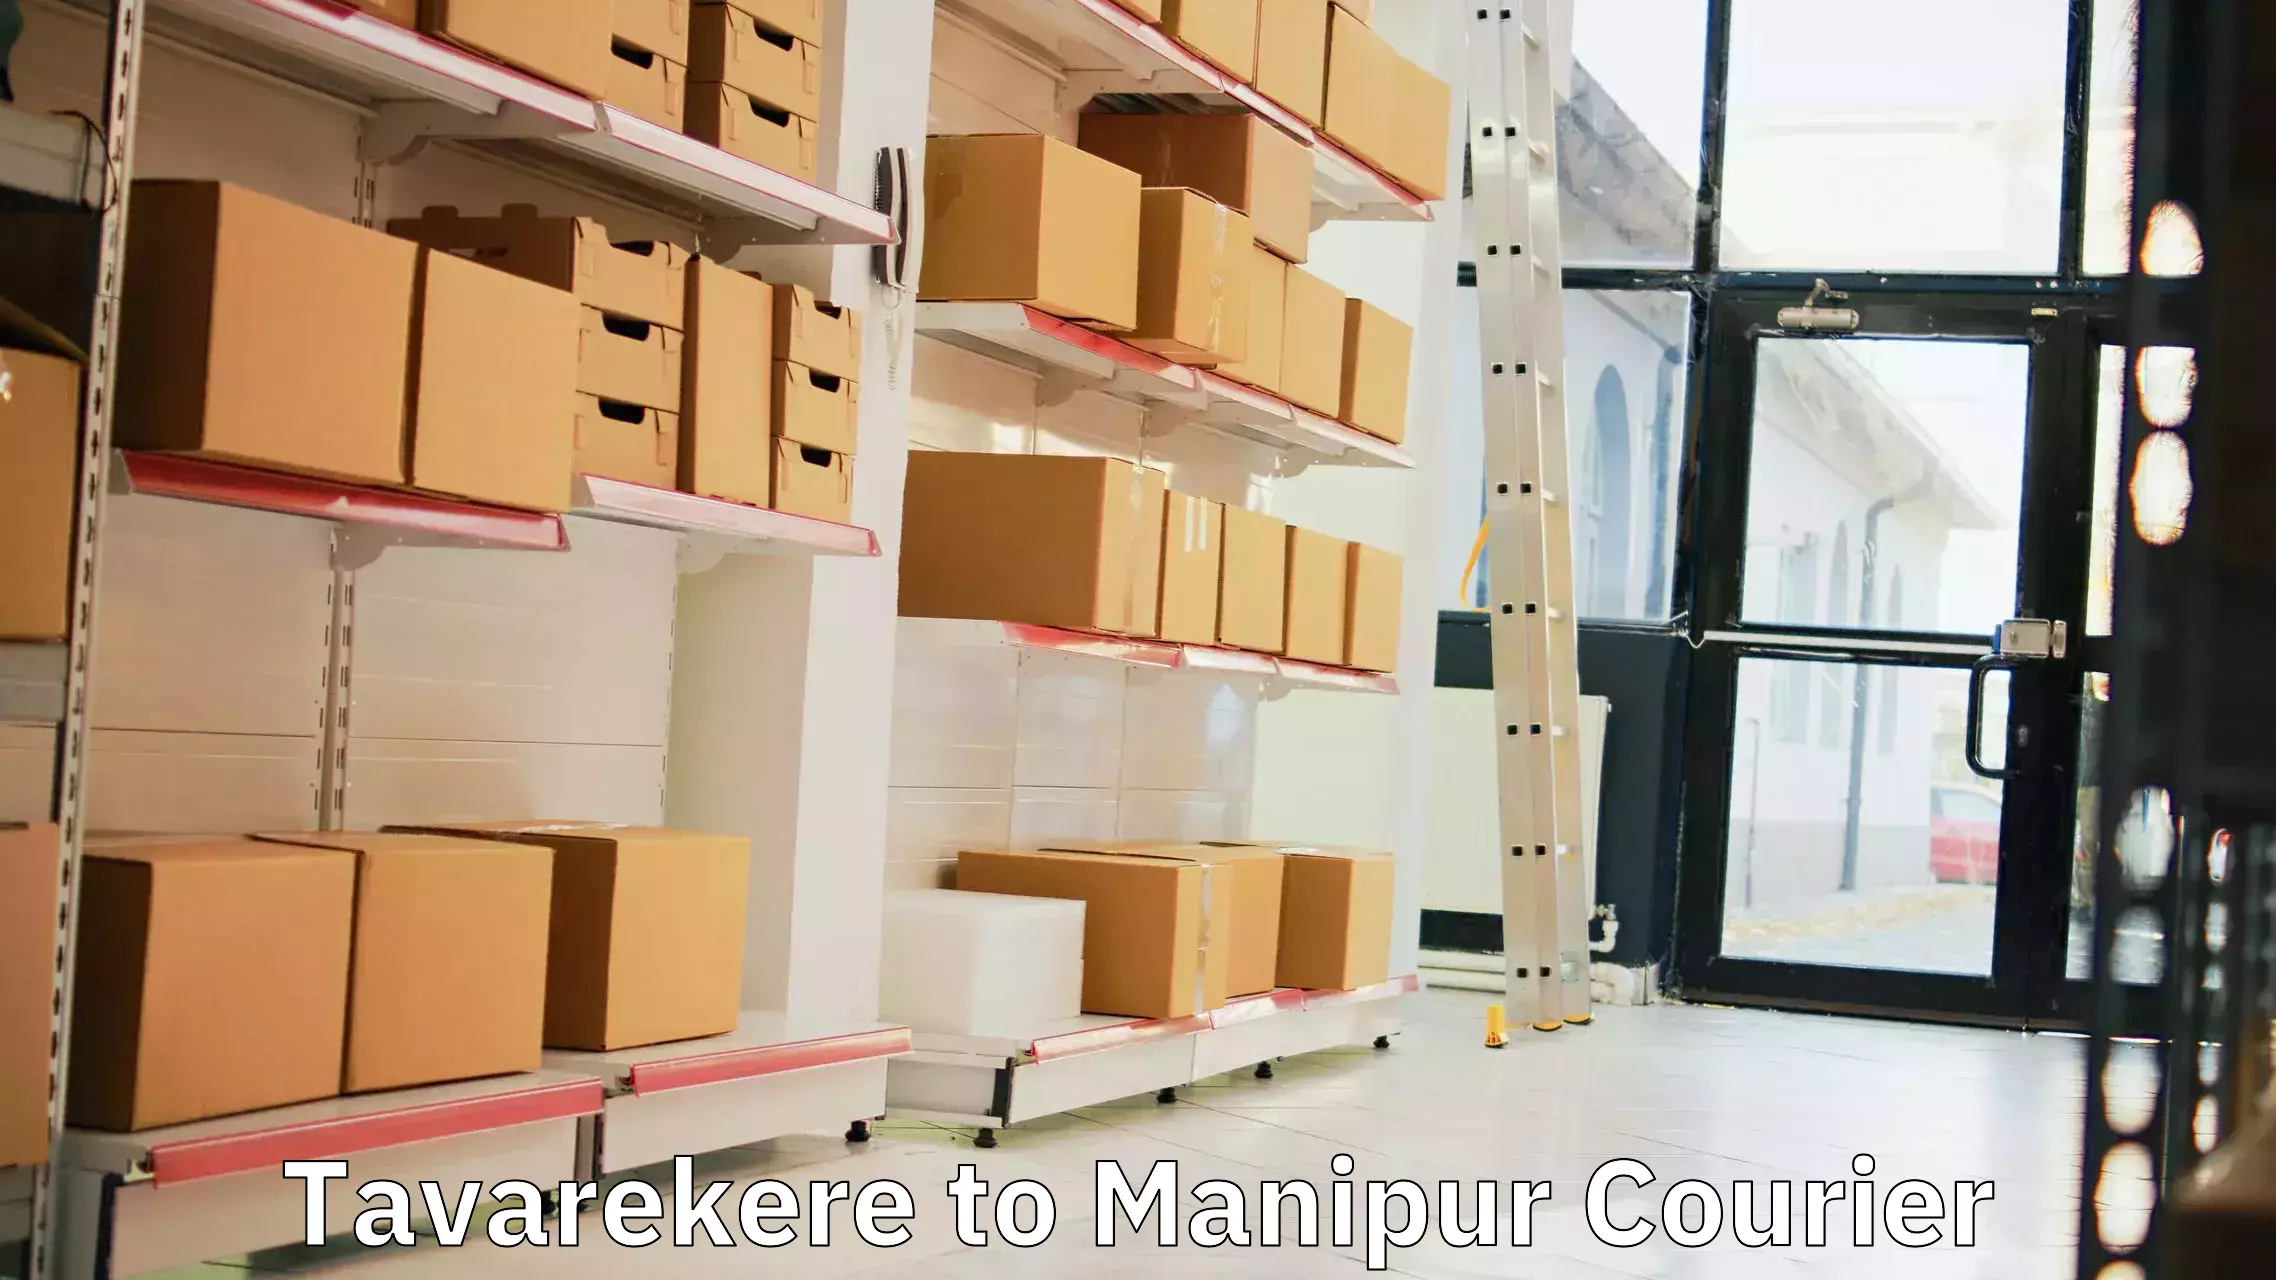 Courier service comparison Tavarekere to Manipur